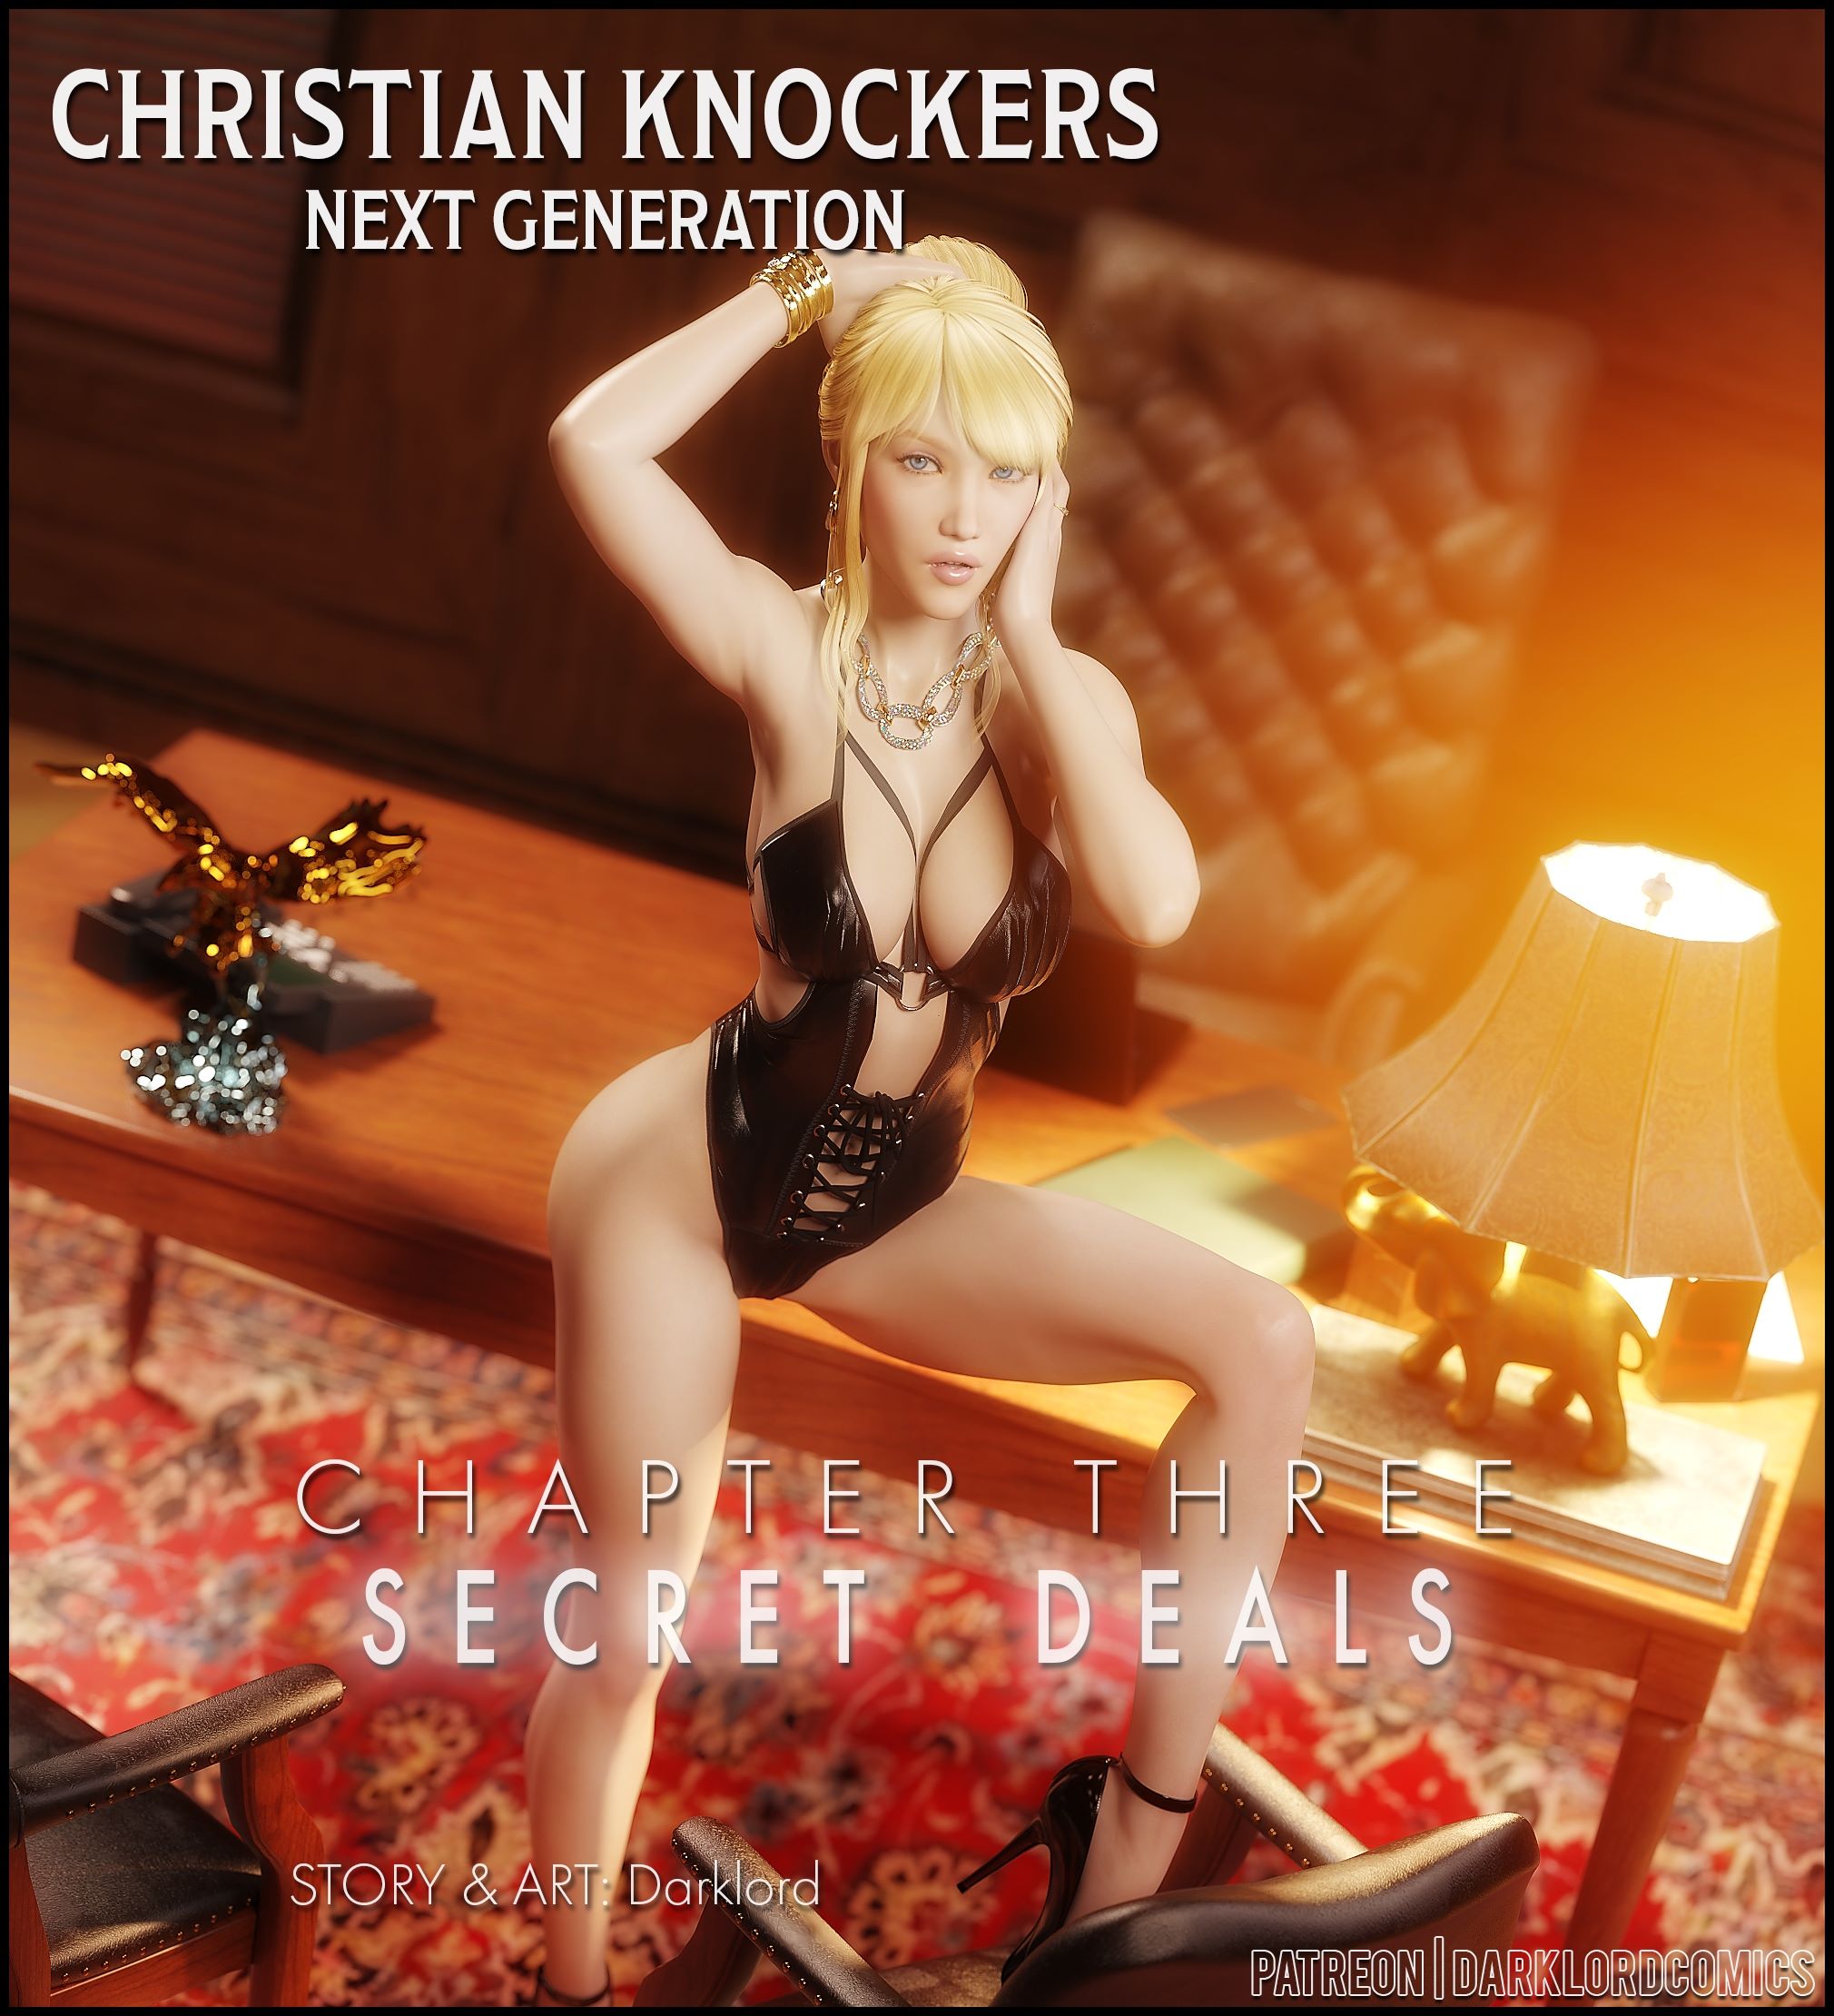 Christian knockers